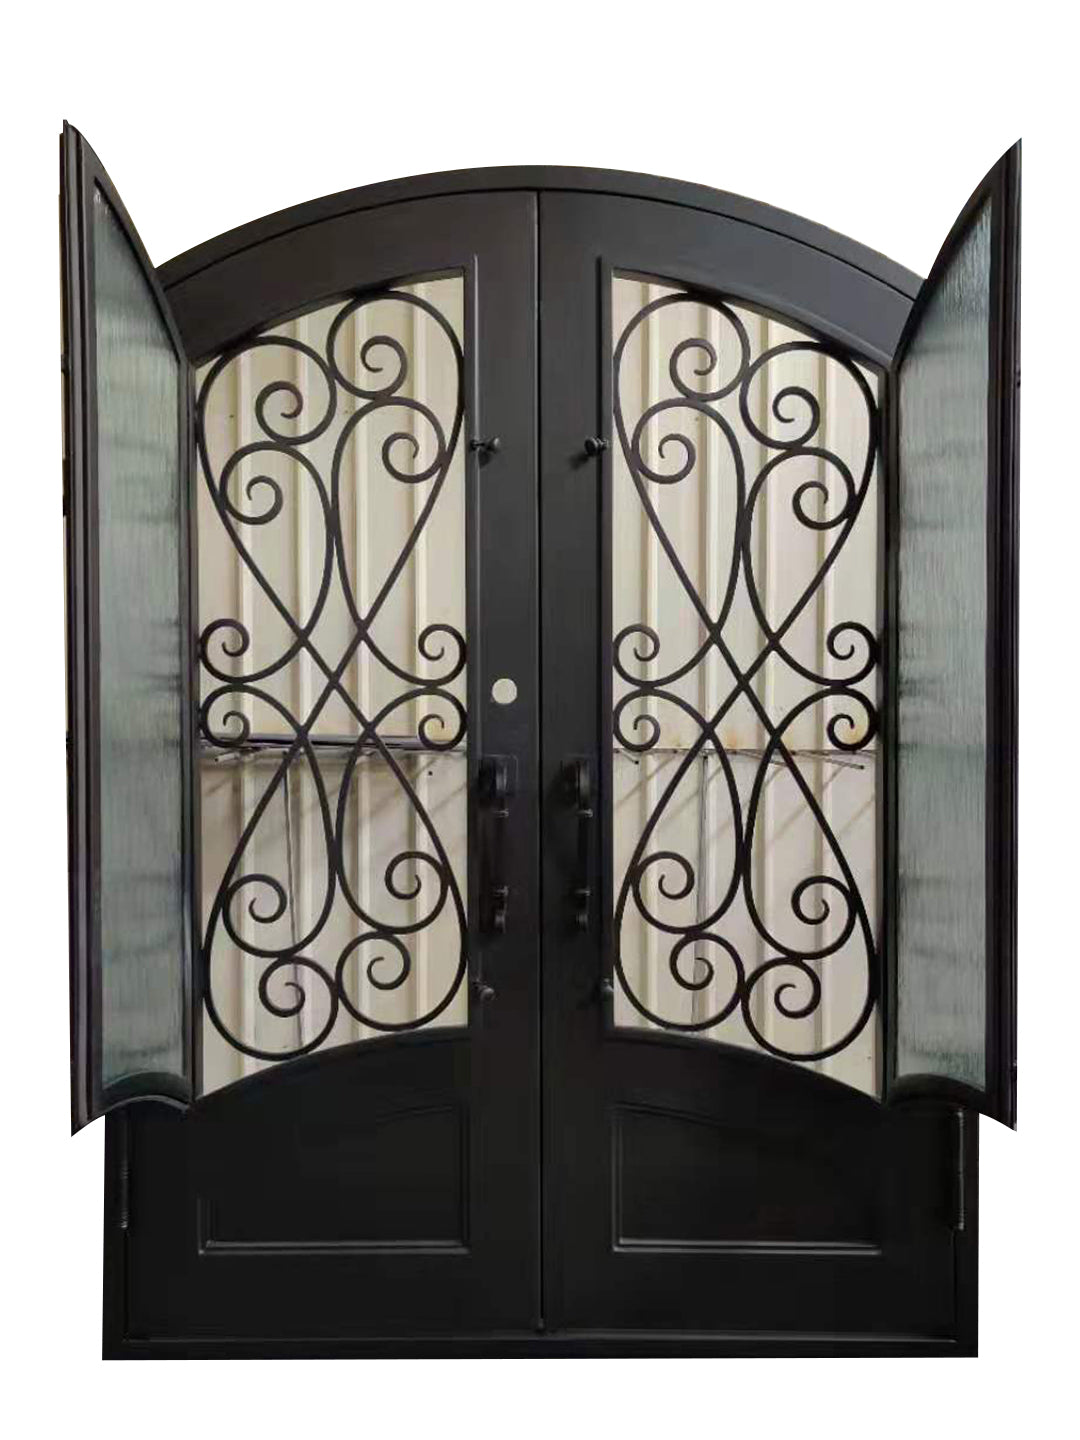 Azle Model Double Front Entry Iron Door With Tempered Rain Glass Dark Bronze Finish - AAWAIZ IMPORTS